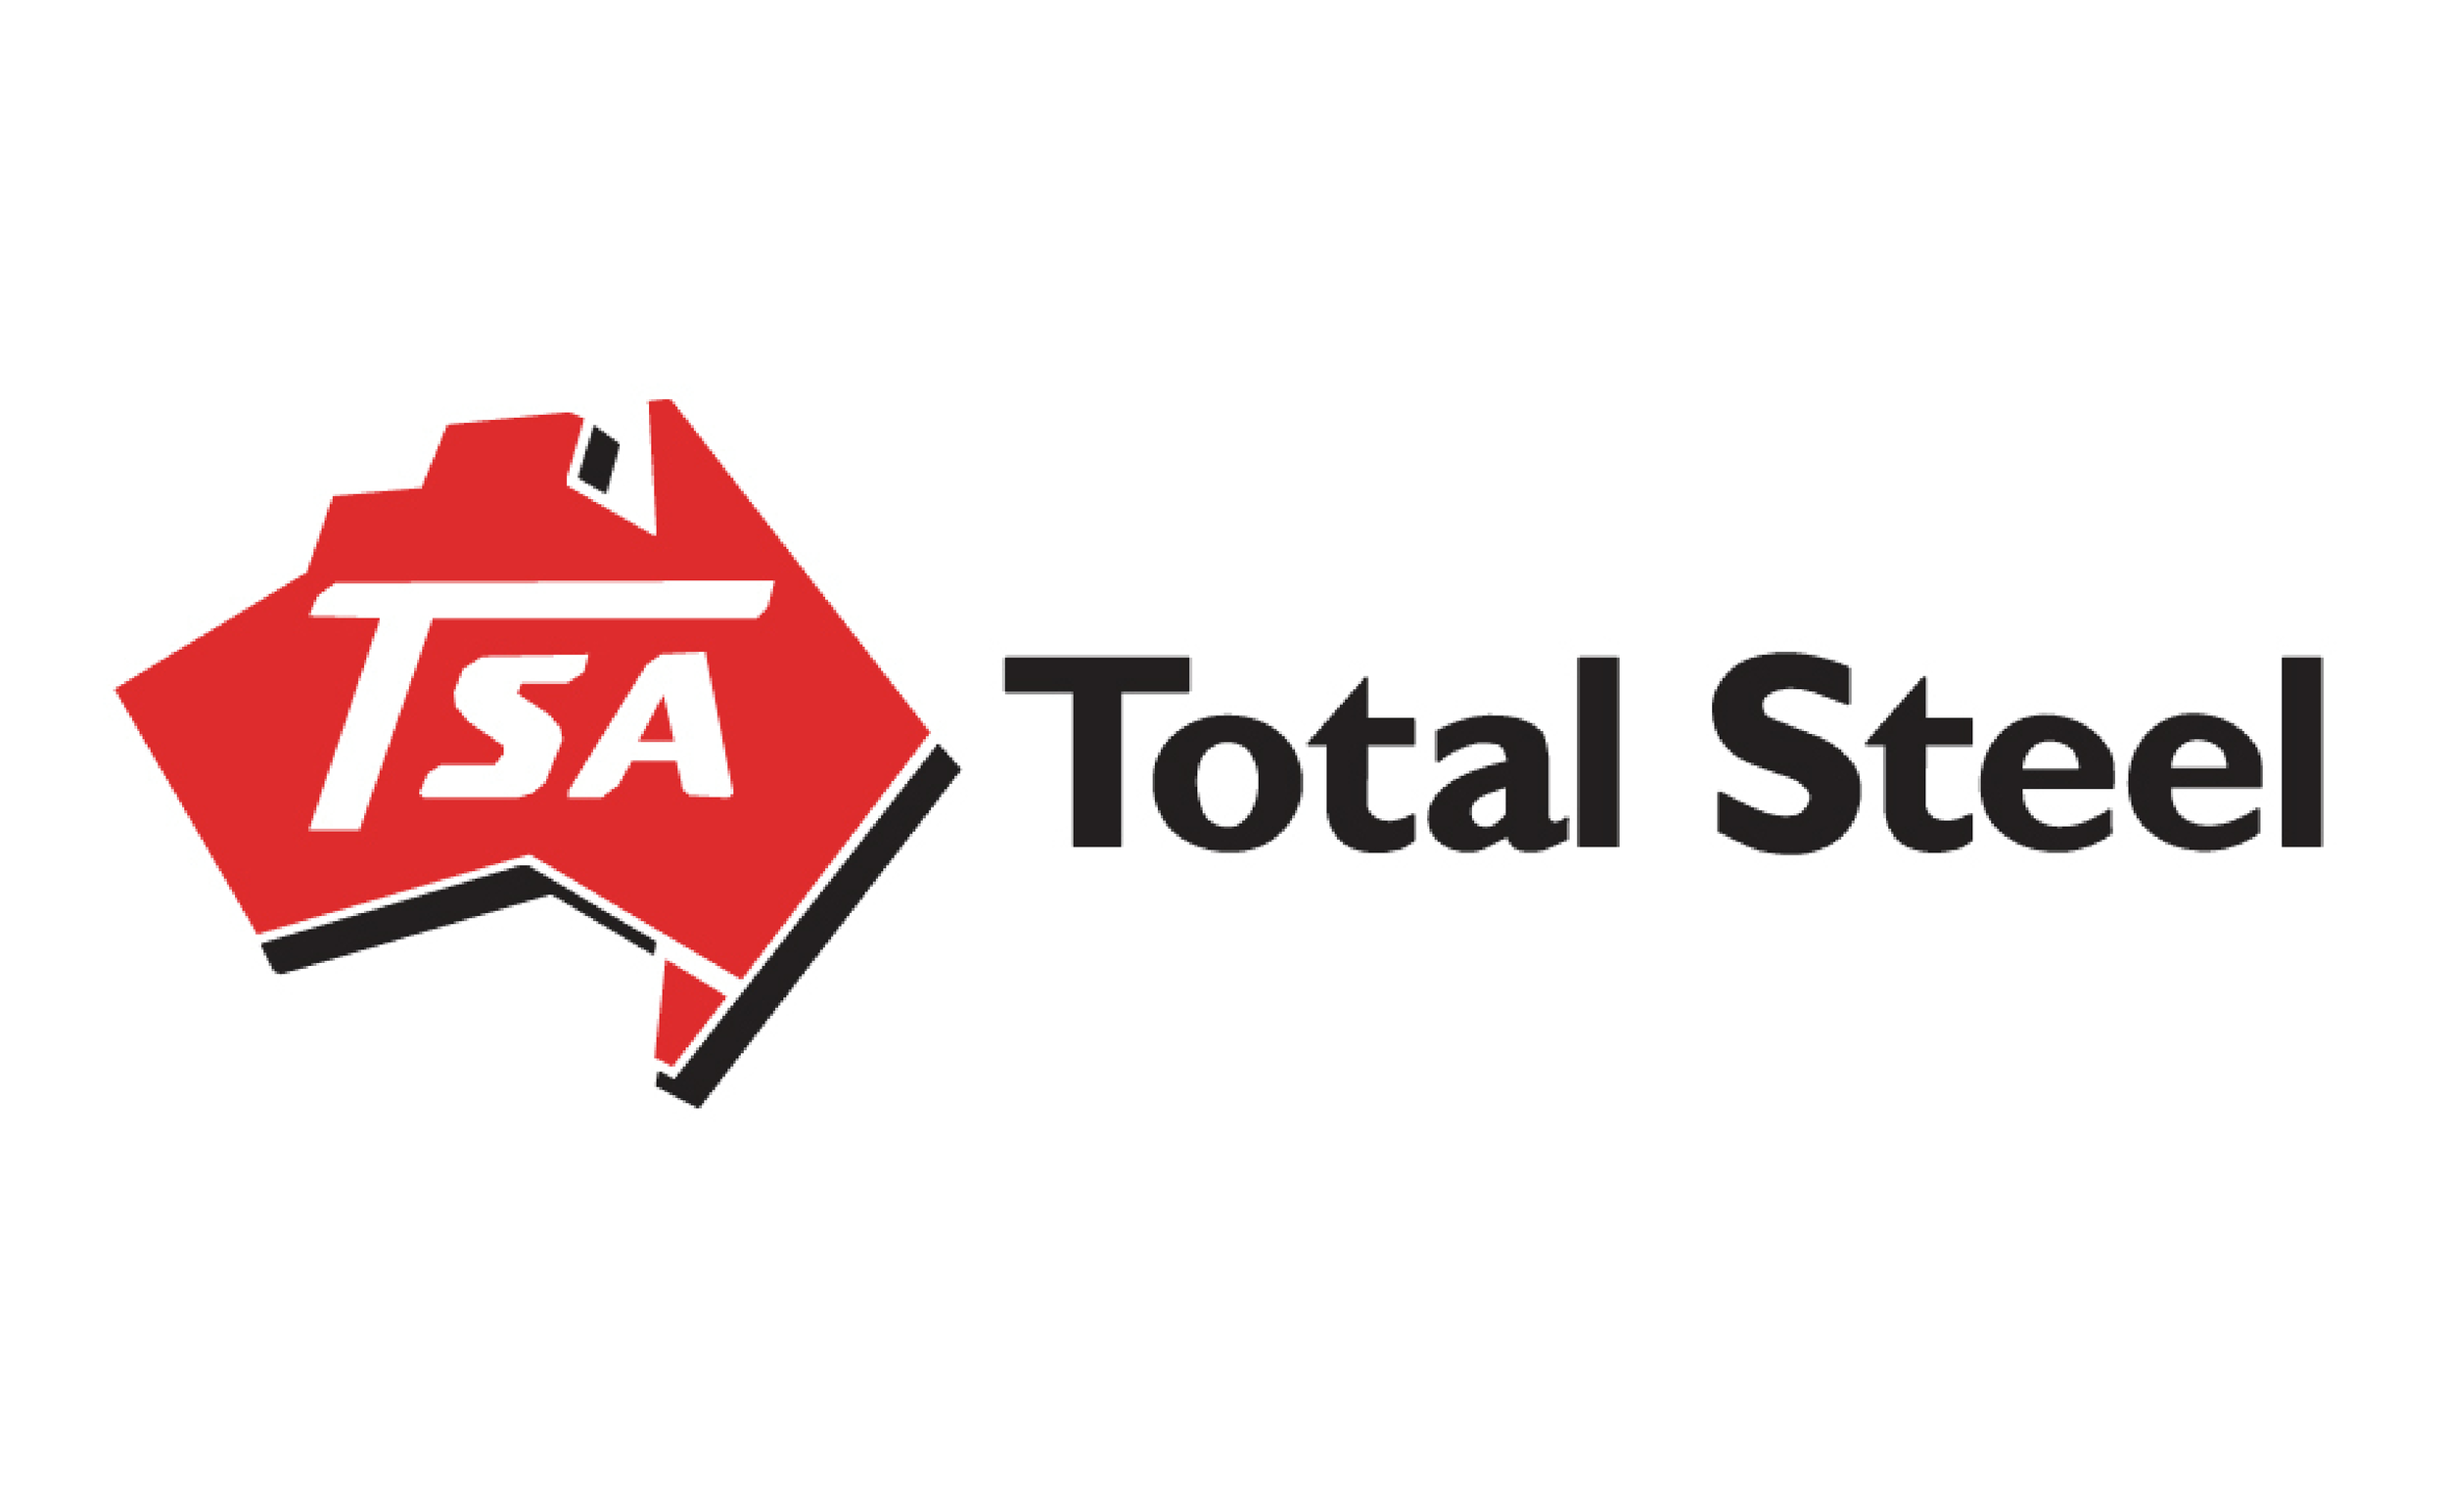 Total Steel of Australia